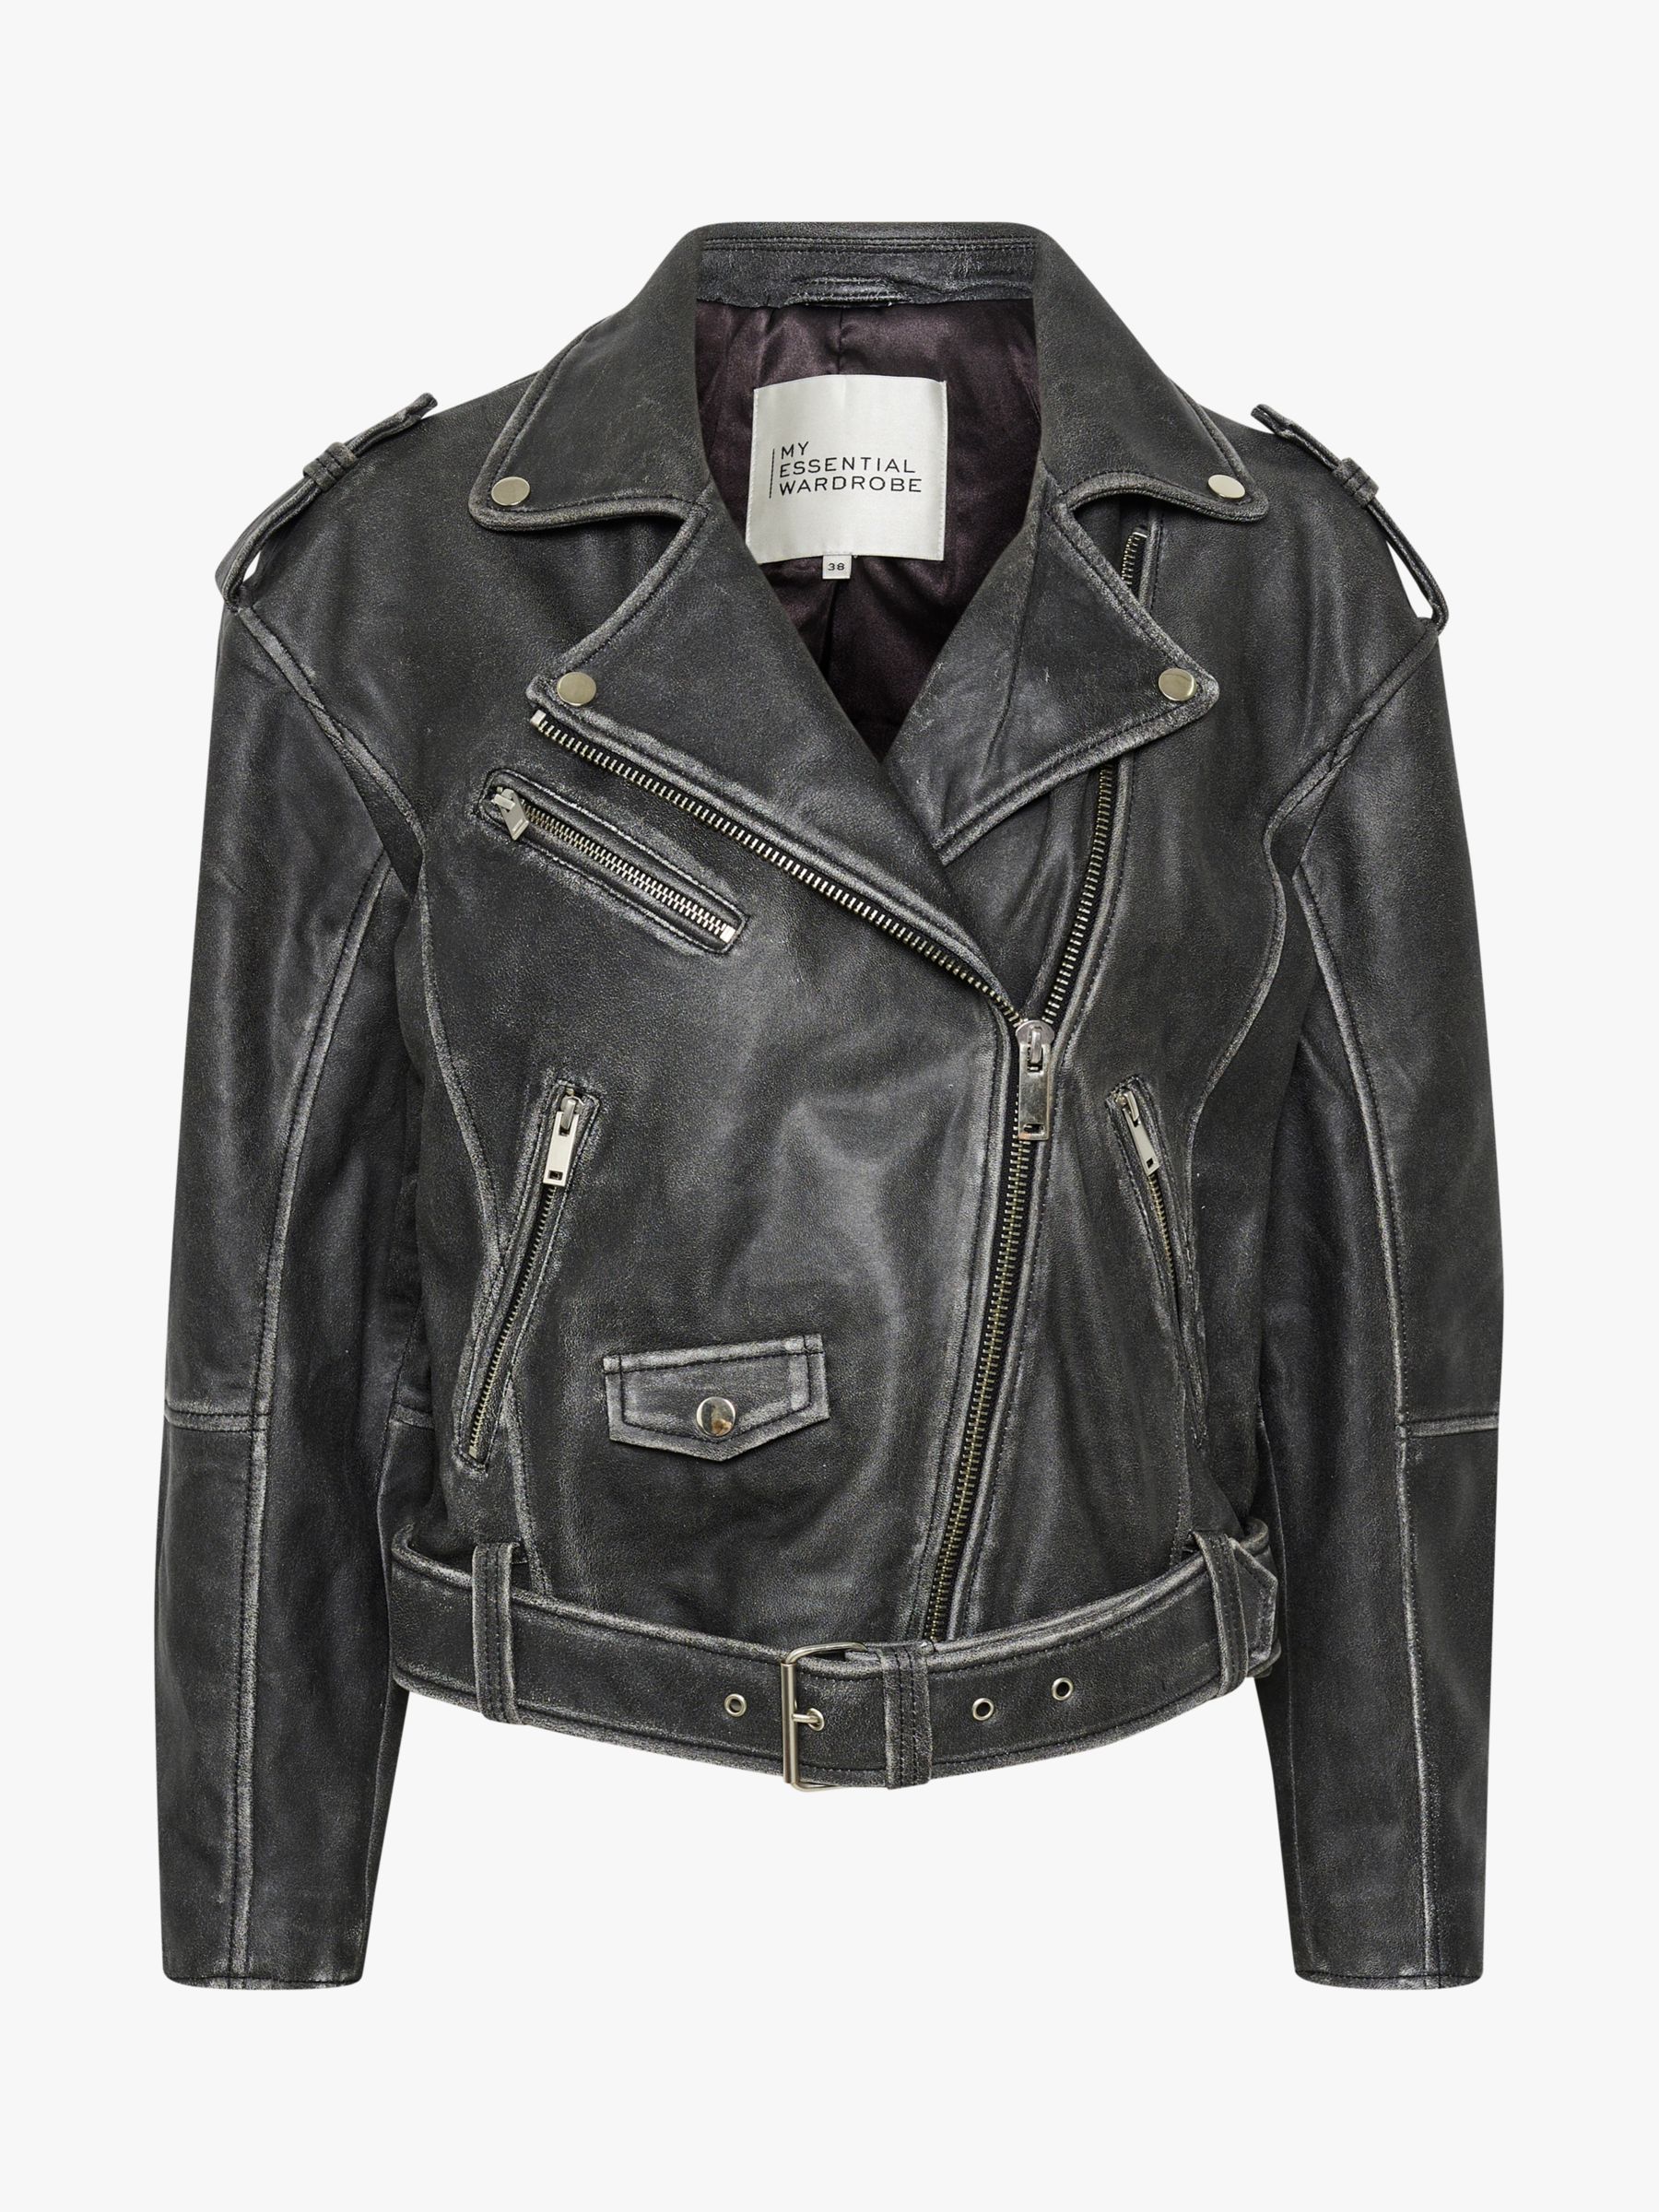 Buy MY ESSENTIAL WARDROBE Gilo Retro Boxy Biker Leather Jacket, Medium Grey Online at johnlewis.com